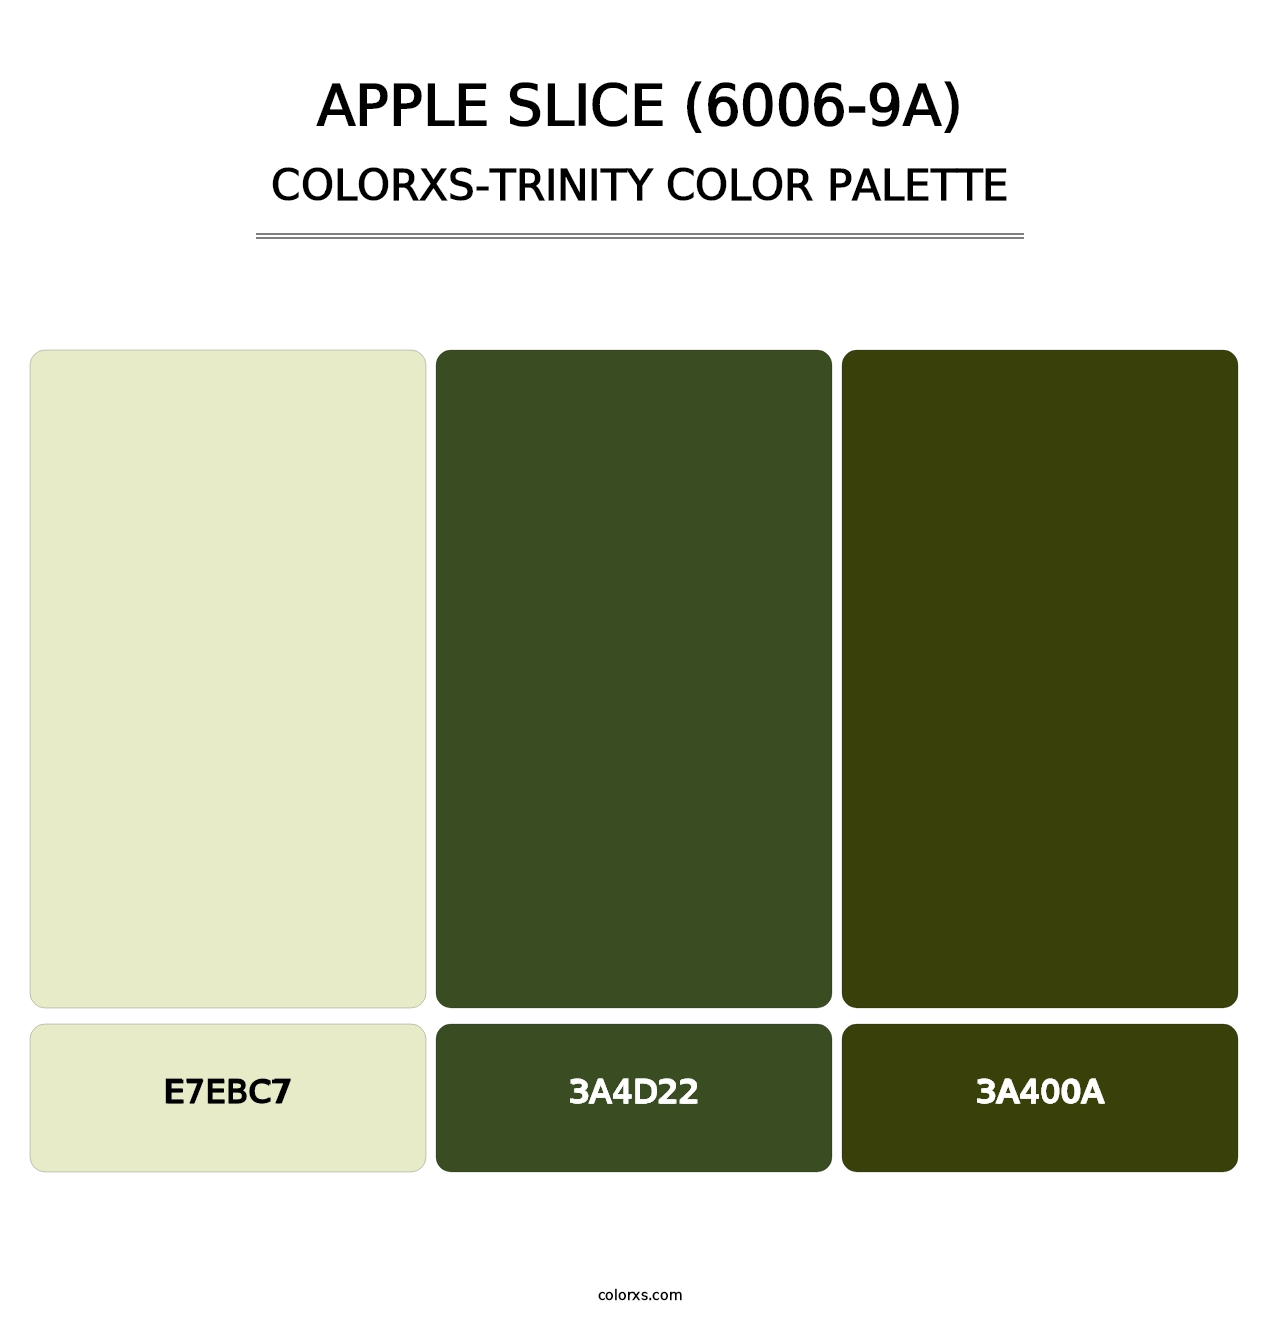 Apple Slice (6006-9A) - Colorxs Trinity Palette